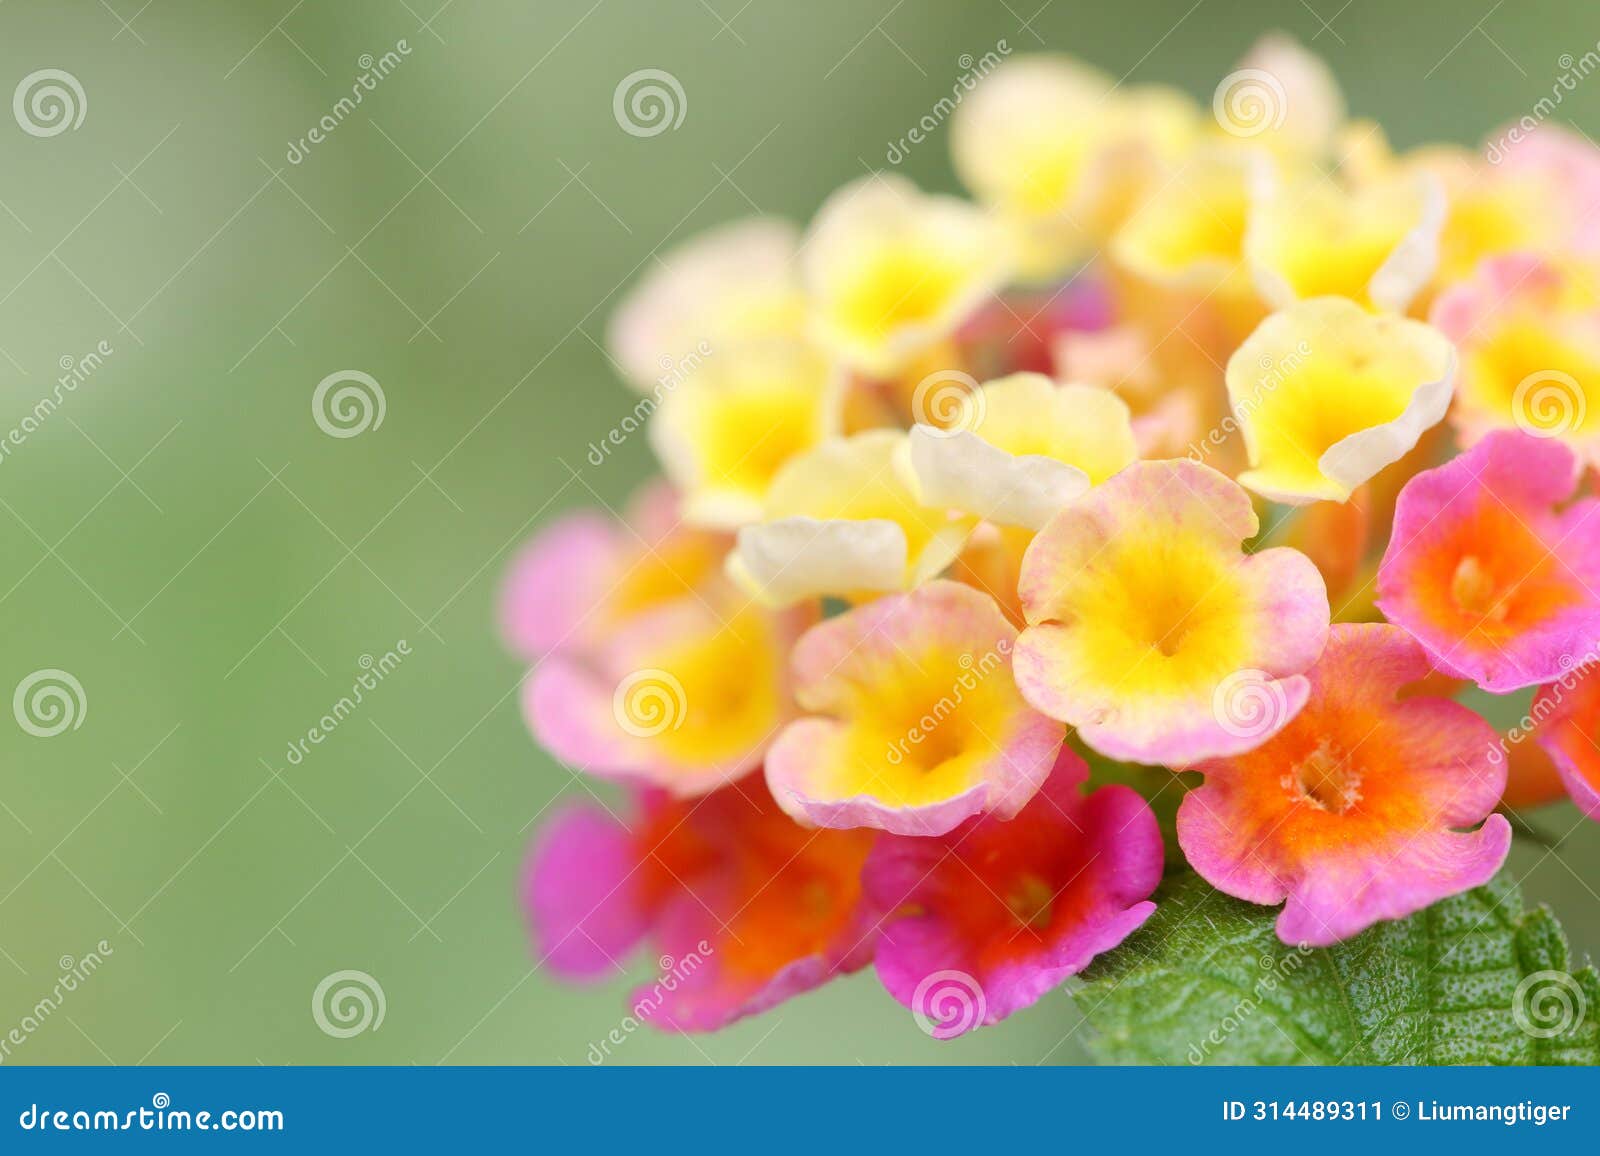 close-up look of the colorful lantana camara flower